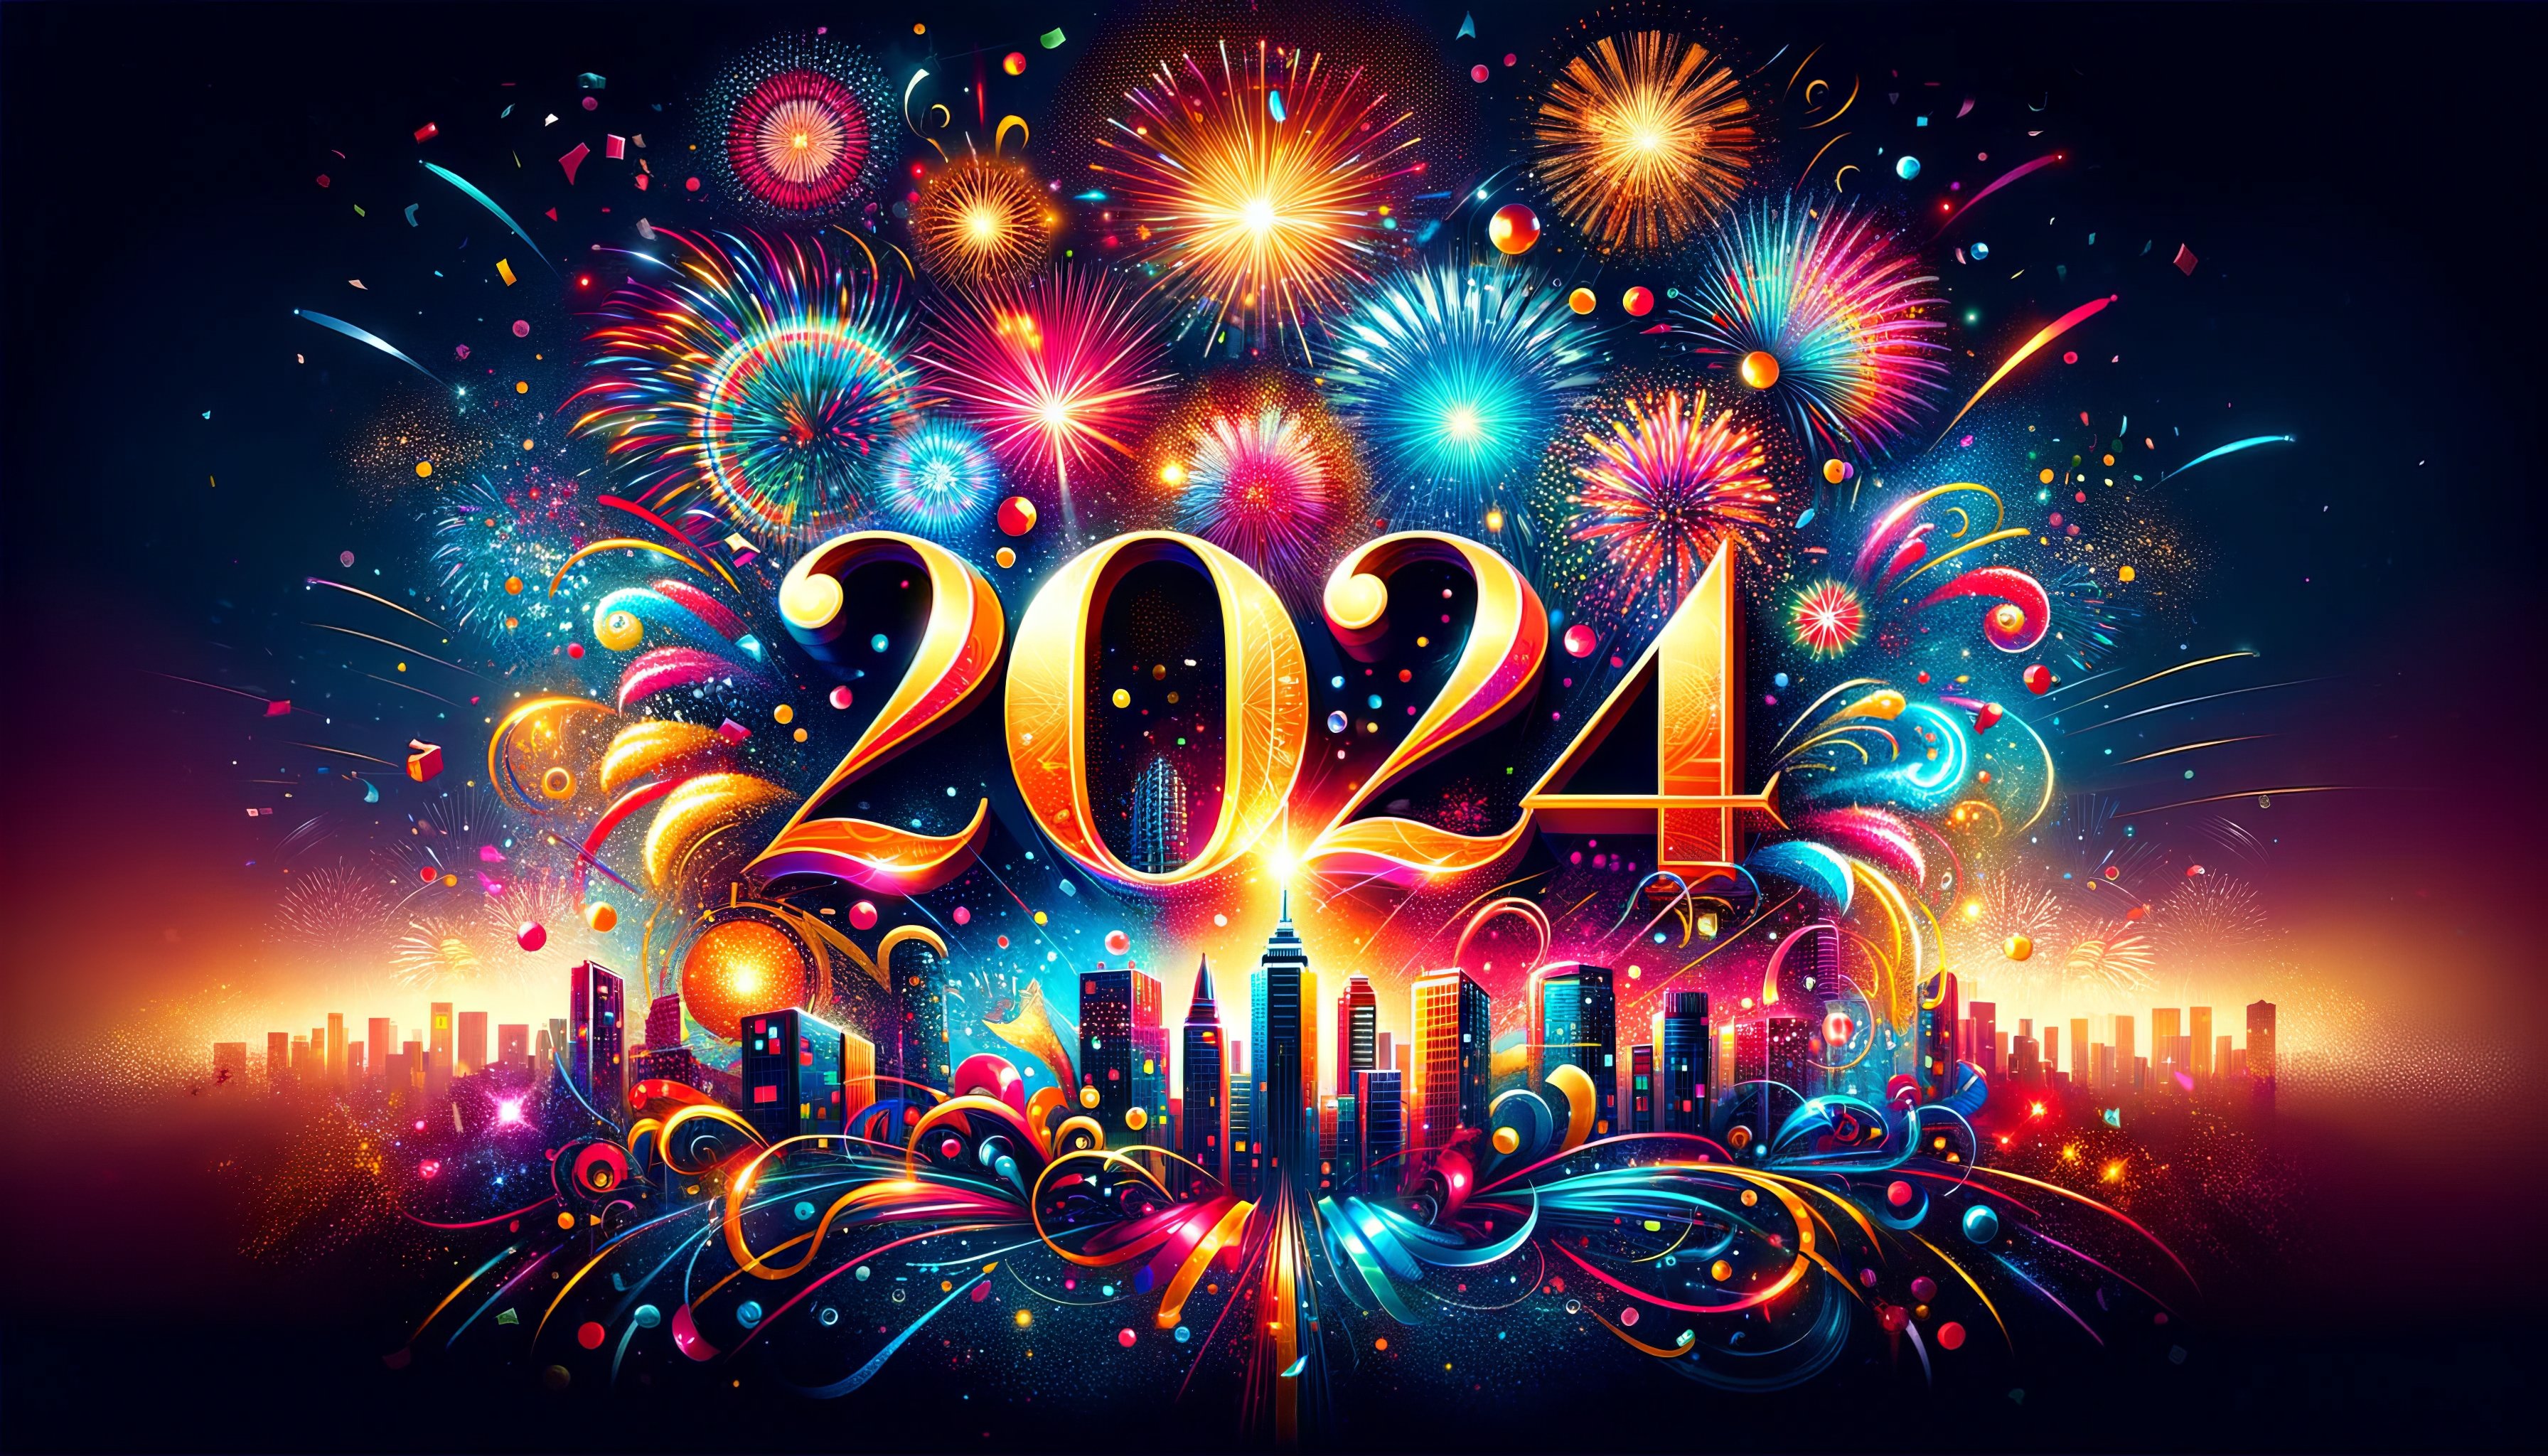 Vibrant HD 2024 fireworks display over city skyline desktop wallpaper and background.